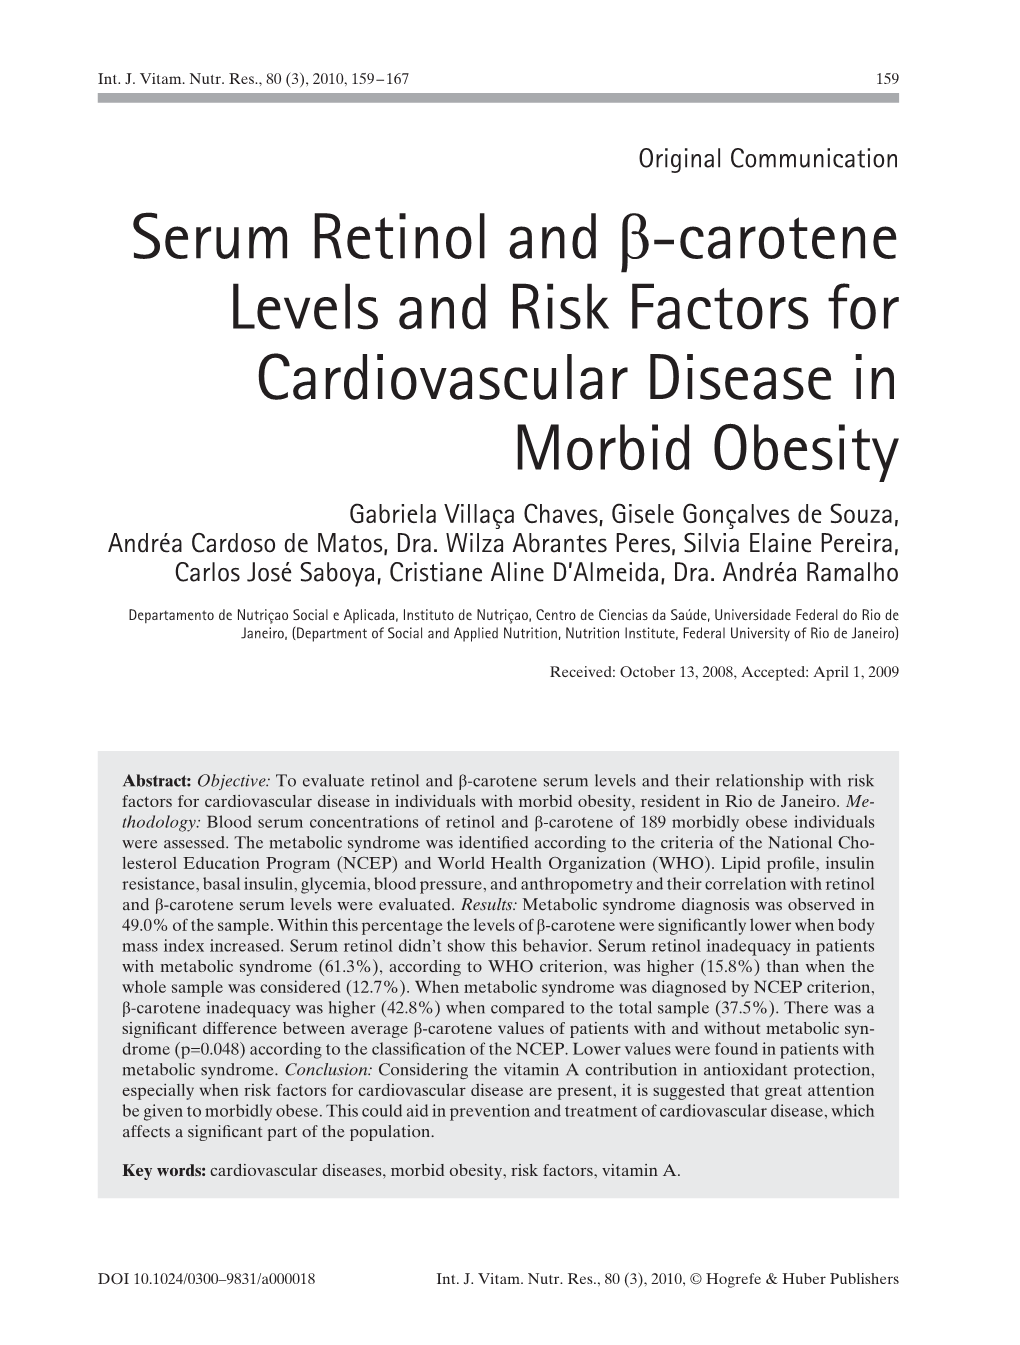 Serum Retinol and Β-Carotene Levels and Risk Factors for Cardiovascular Disease in Morbid Obesity